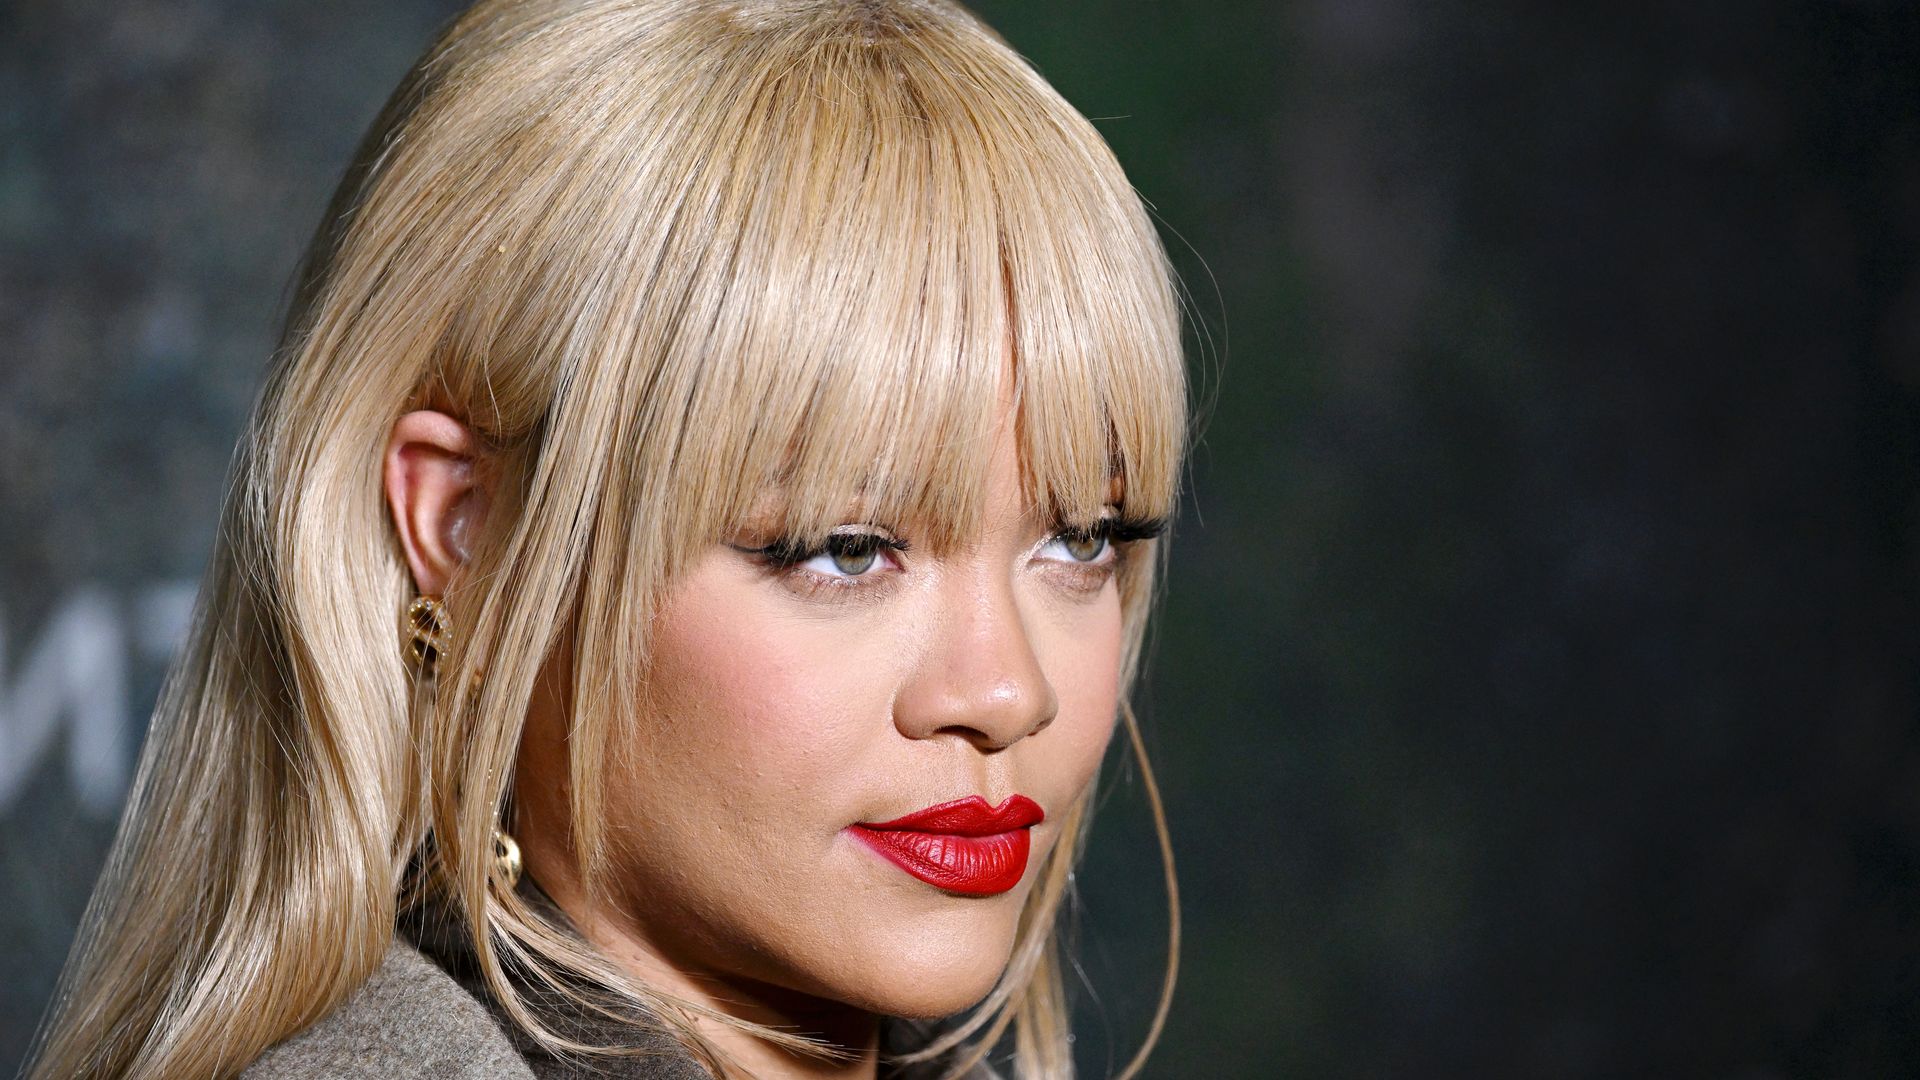 Rihanna stuns with dramatic hair transformation at lavish London event